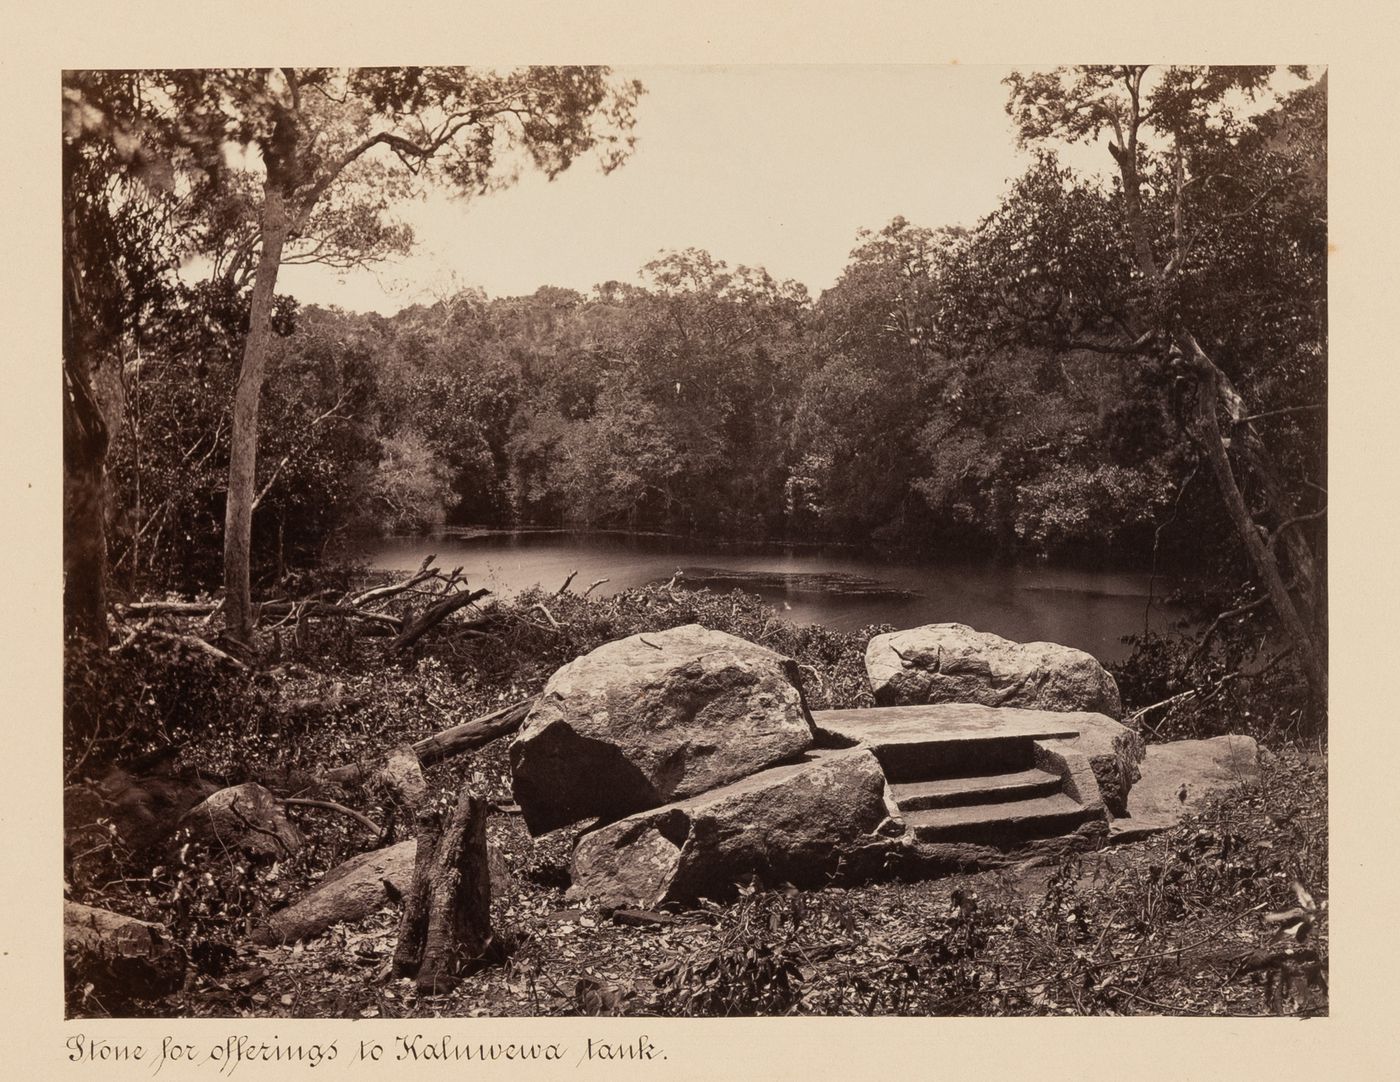 View of an offering site and the Kalawewa water tank, Kalawewa, Ceylon (now Sri Lanka)